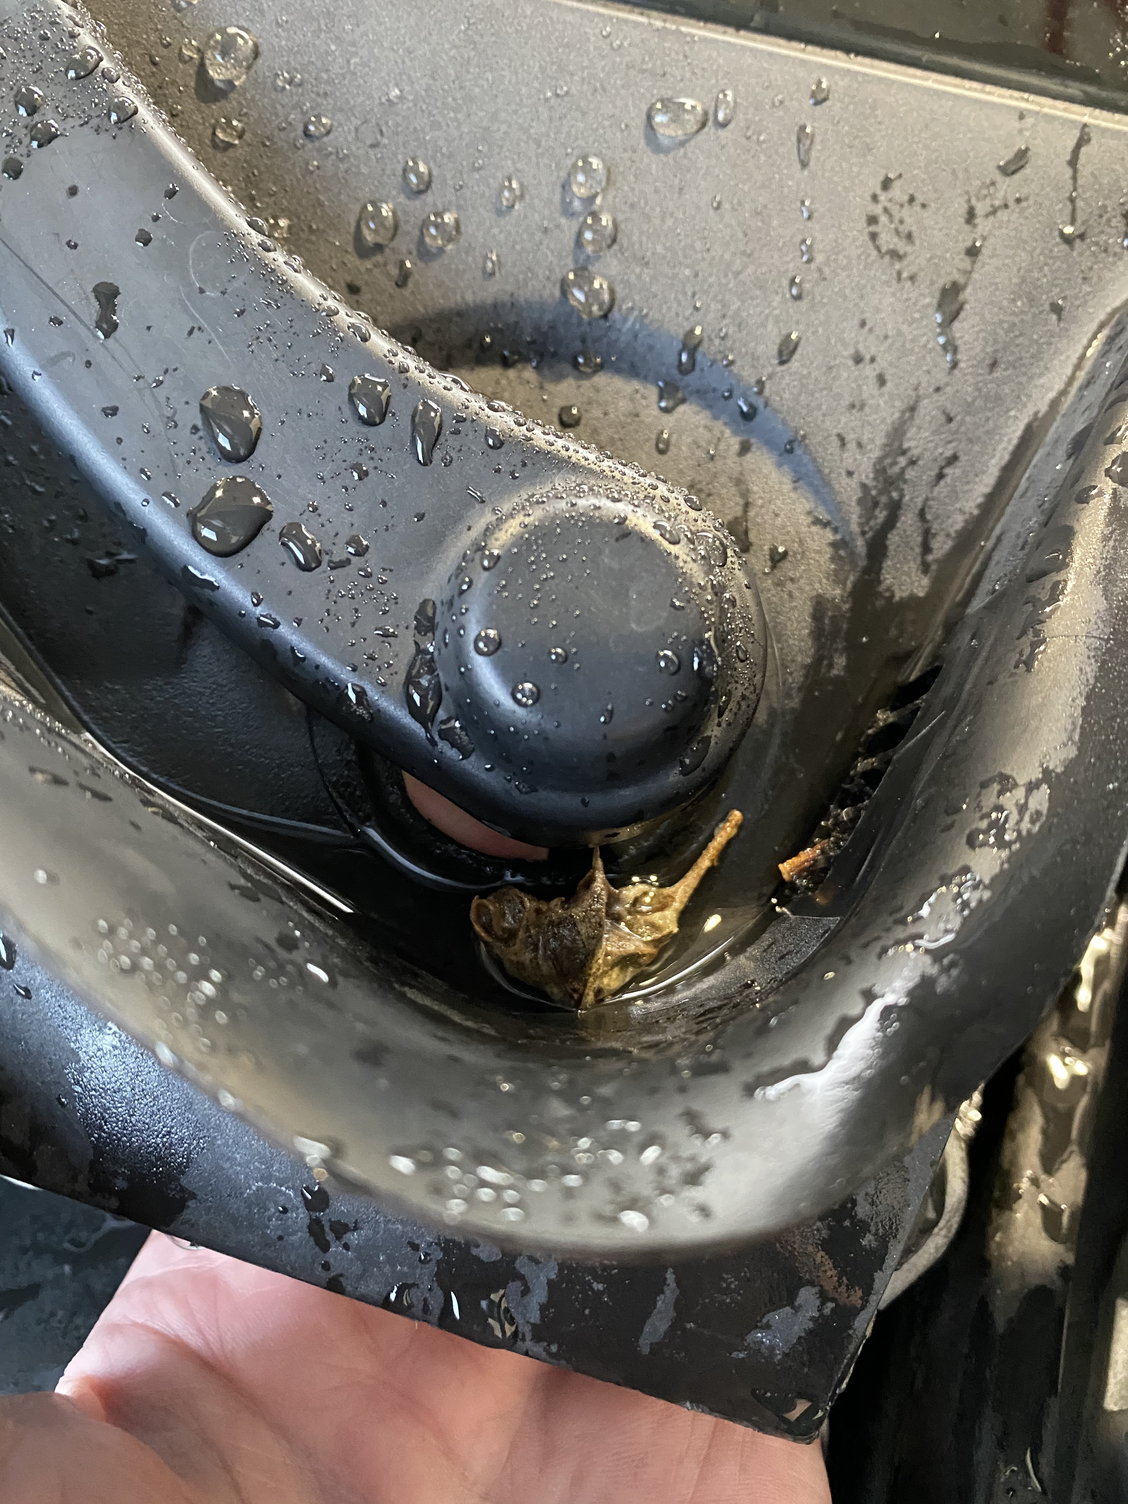 Is it safe using RainX in my Jeep? - Maintenance/Repairs - Car Talk  Community